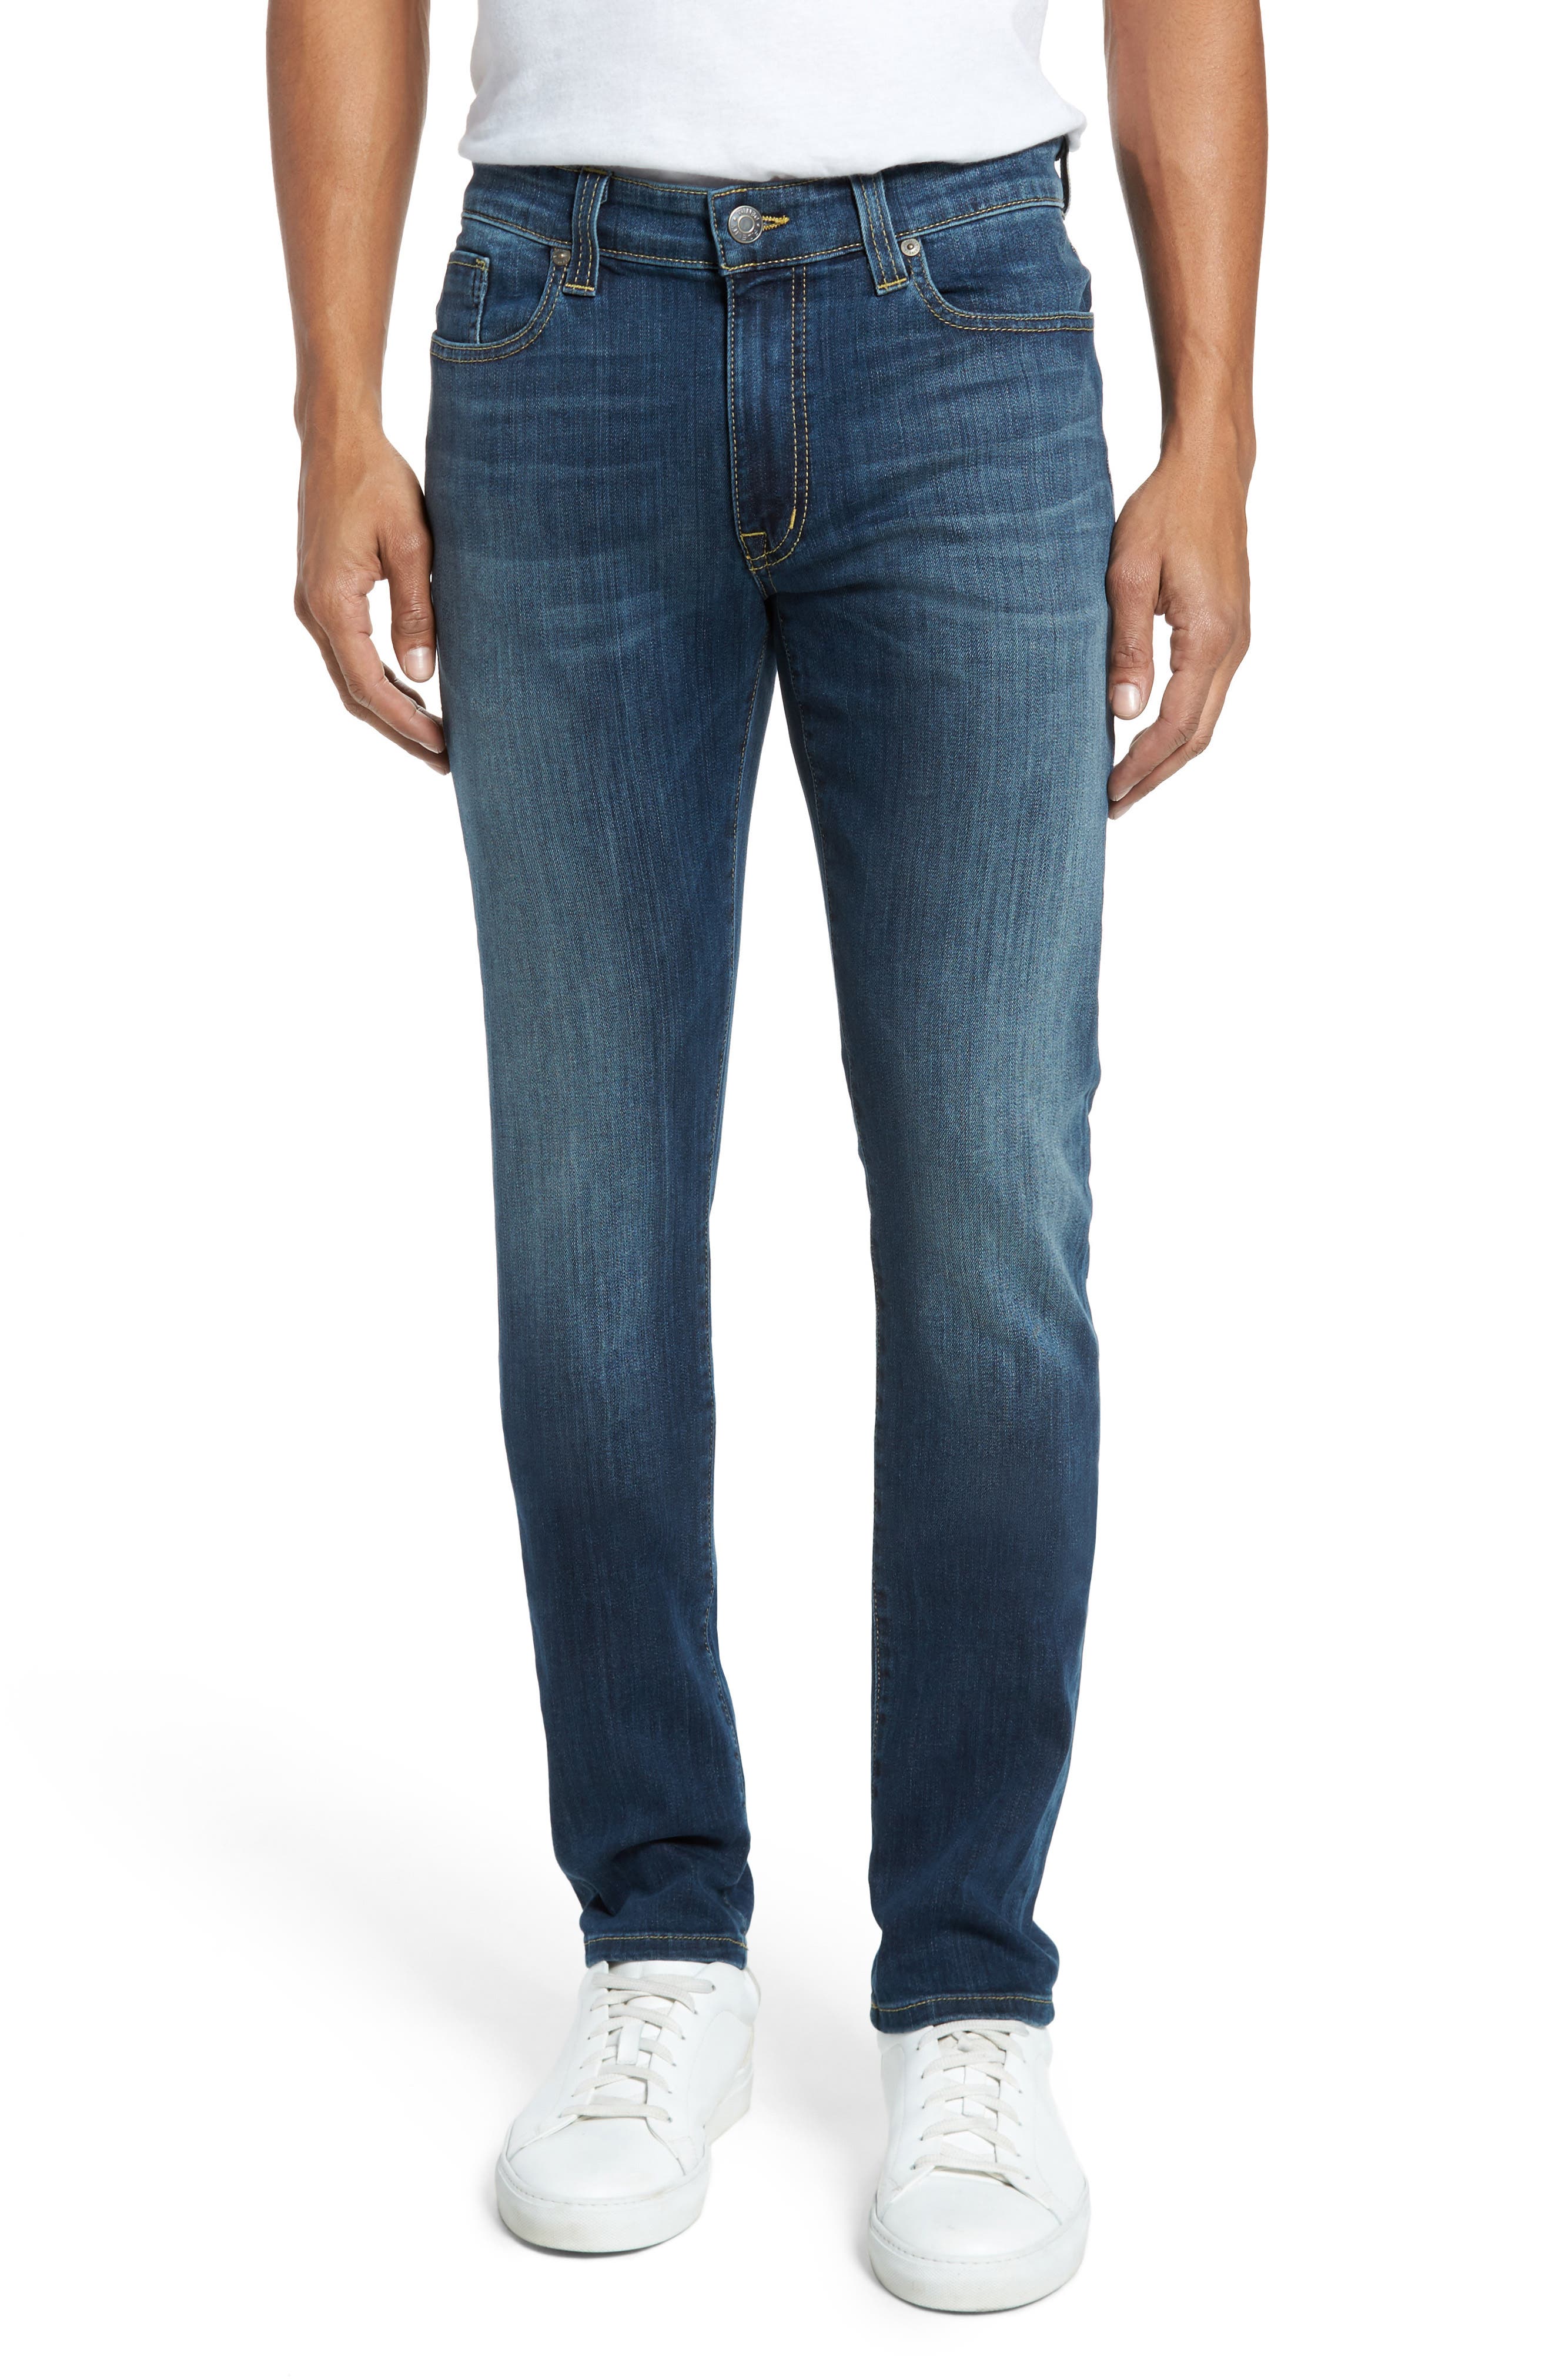 spanx jeans dillards